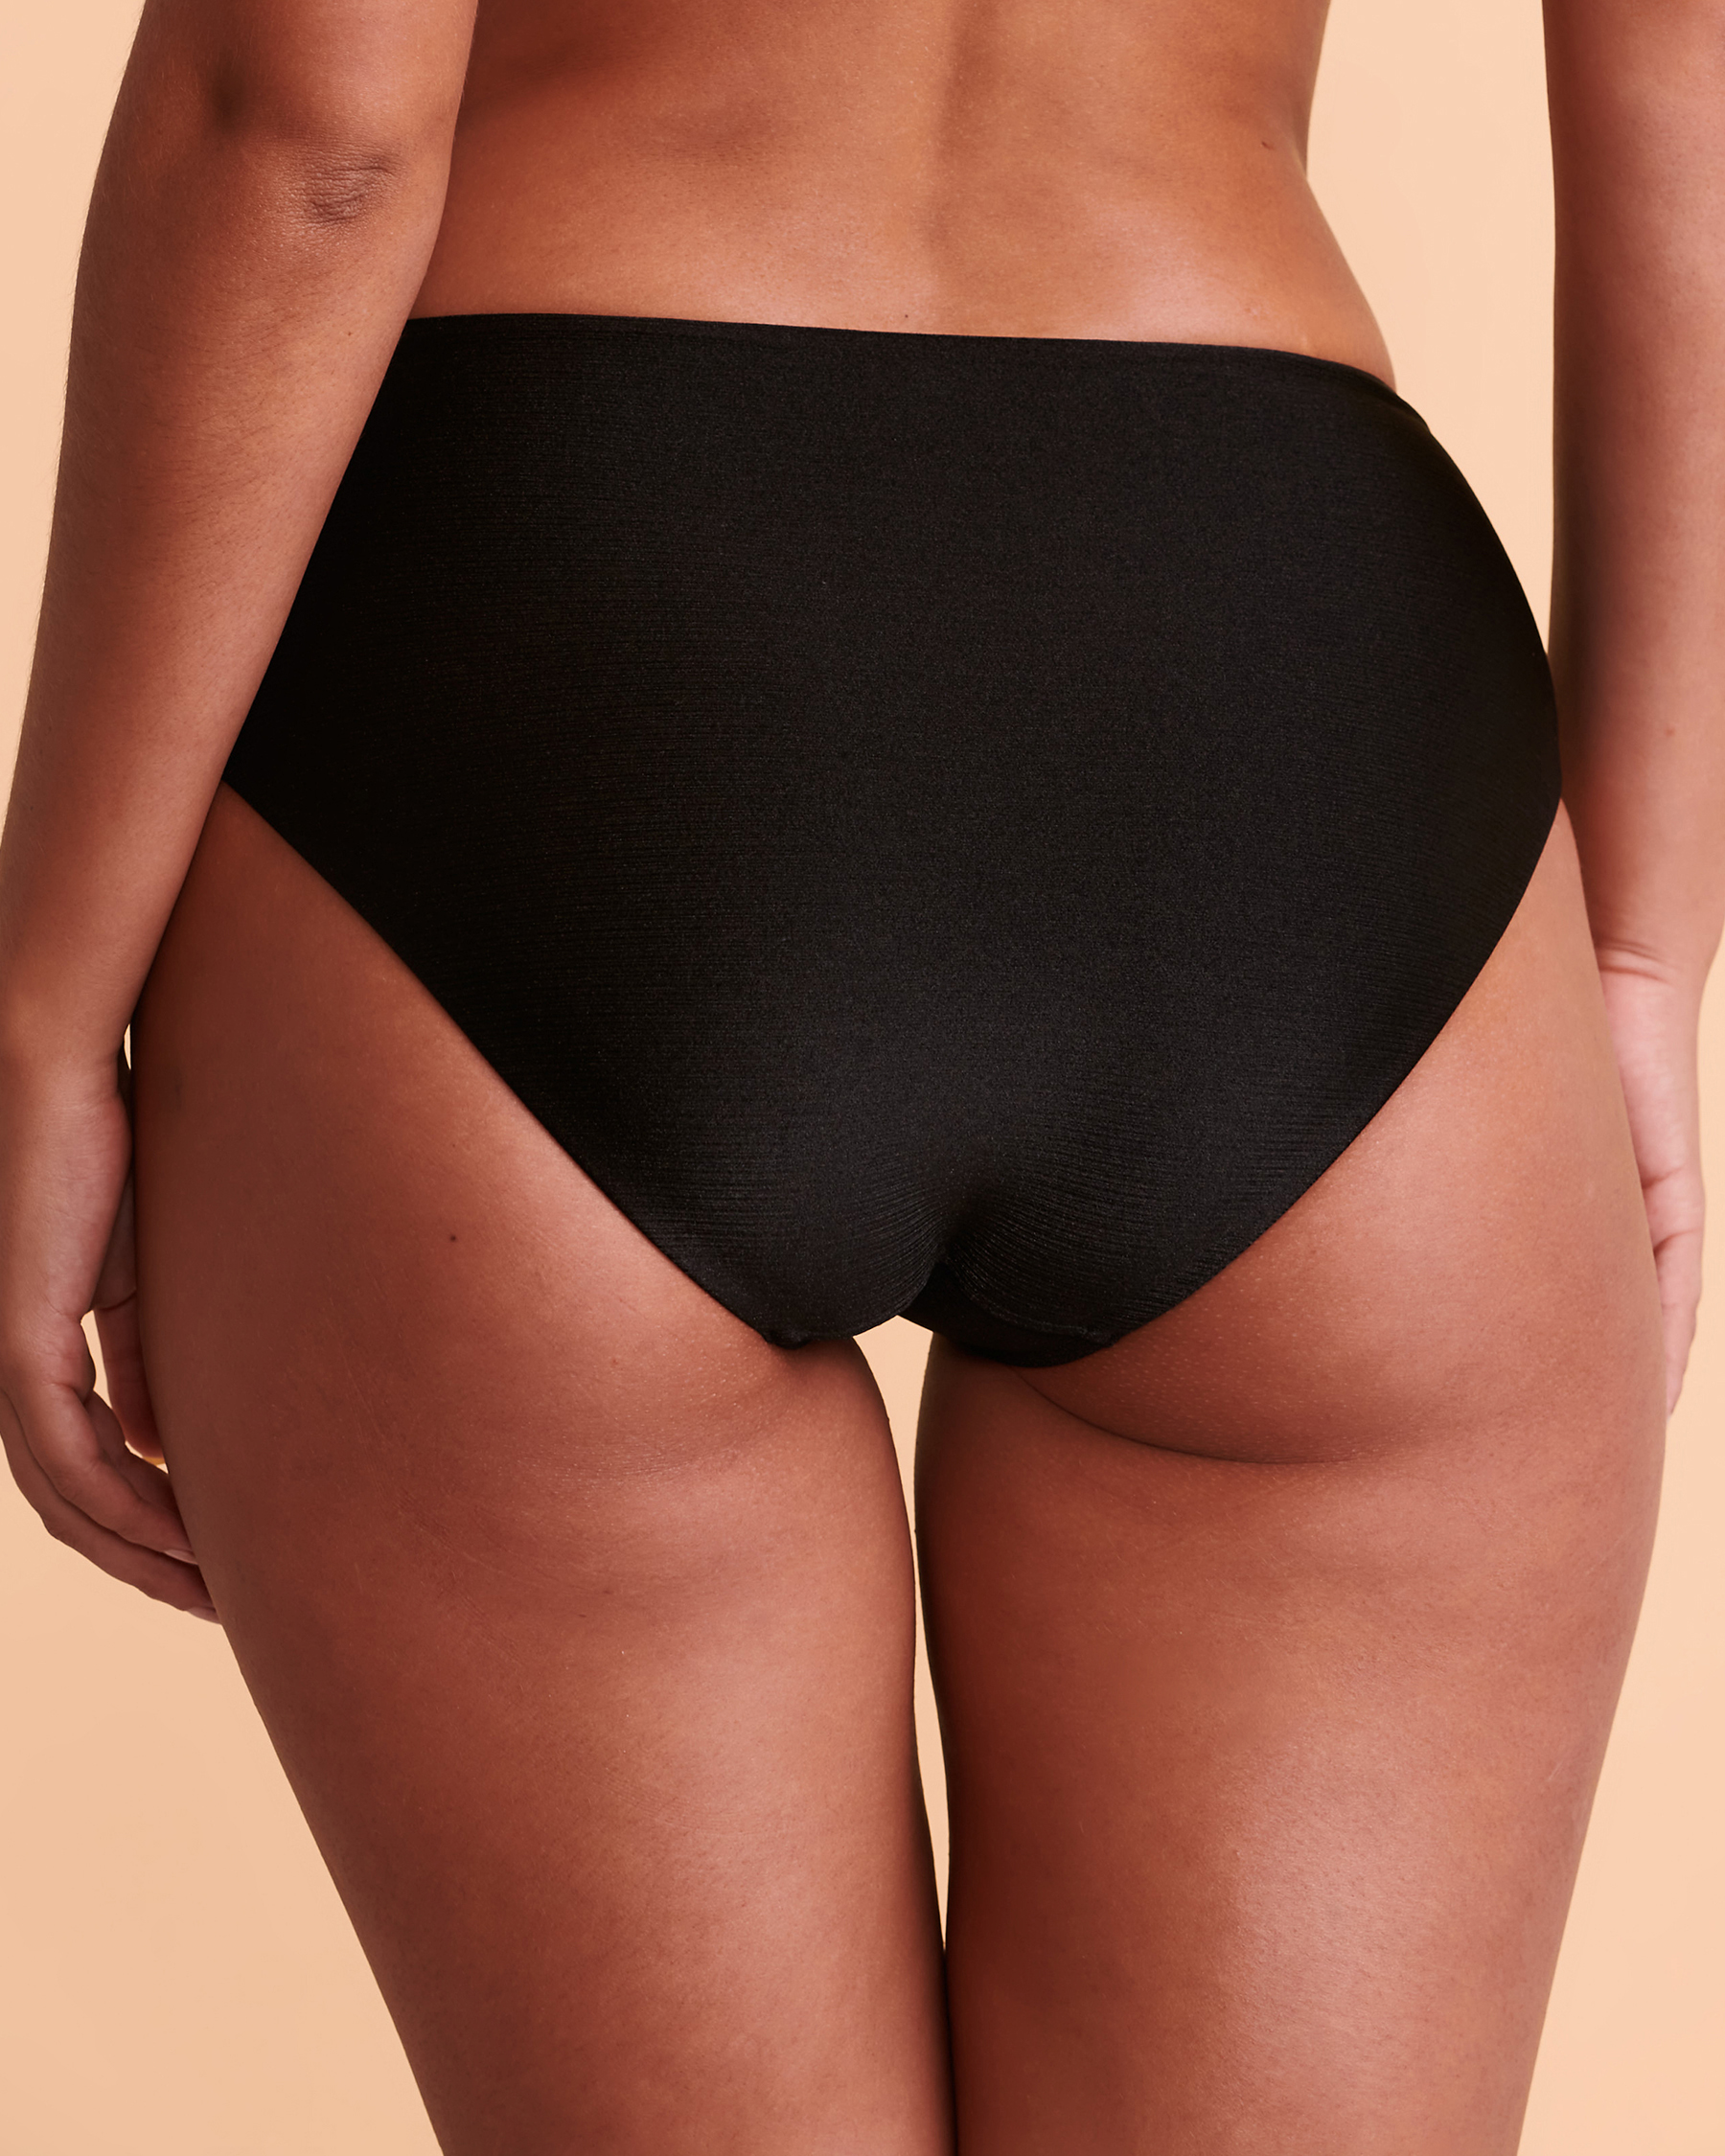 SANTEMARE SHINNY TEXTURED High Waist Bikini Bottom Black 01300152 - View3